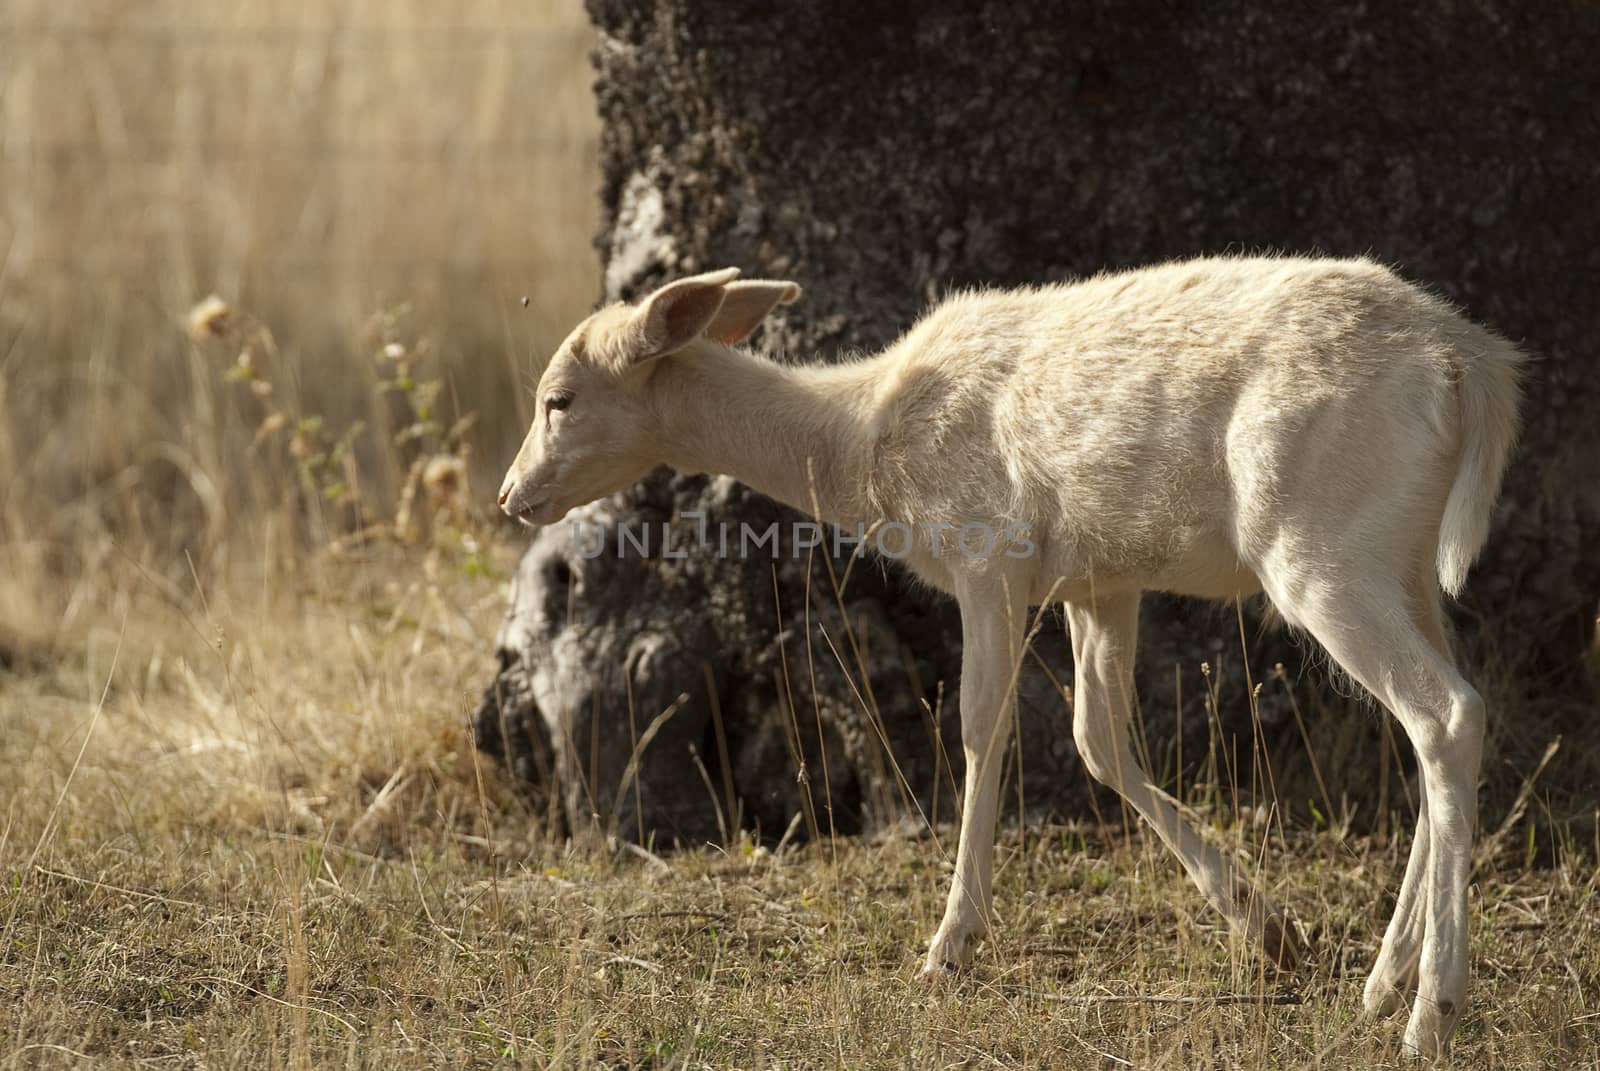 Fallow Deers, Dama dama, Spain, Albino, rare white by jalonsohu@gmail.com